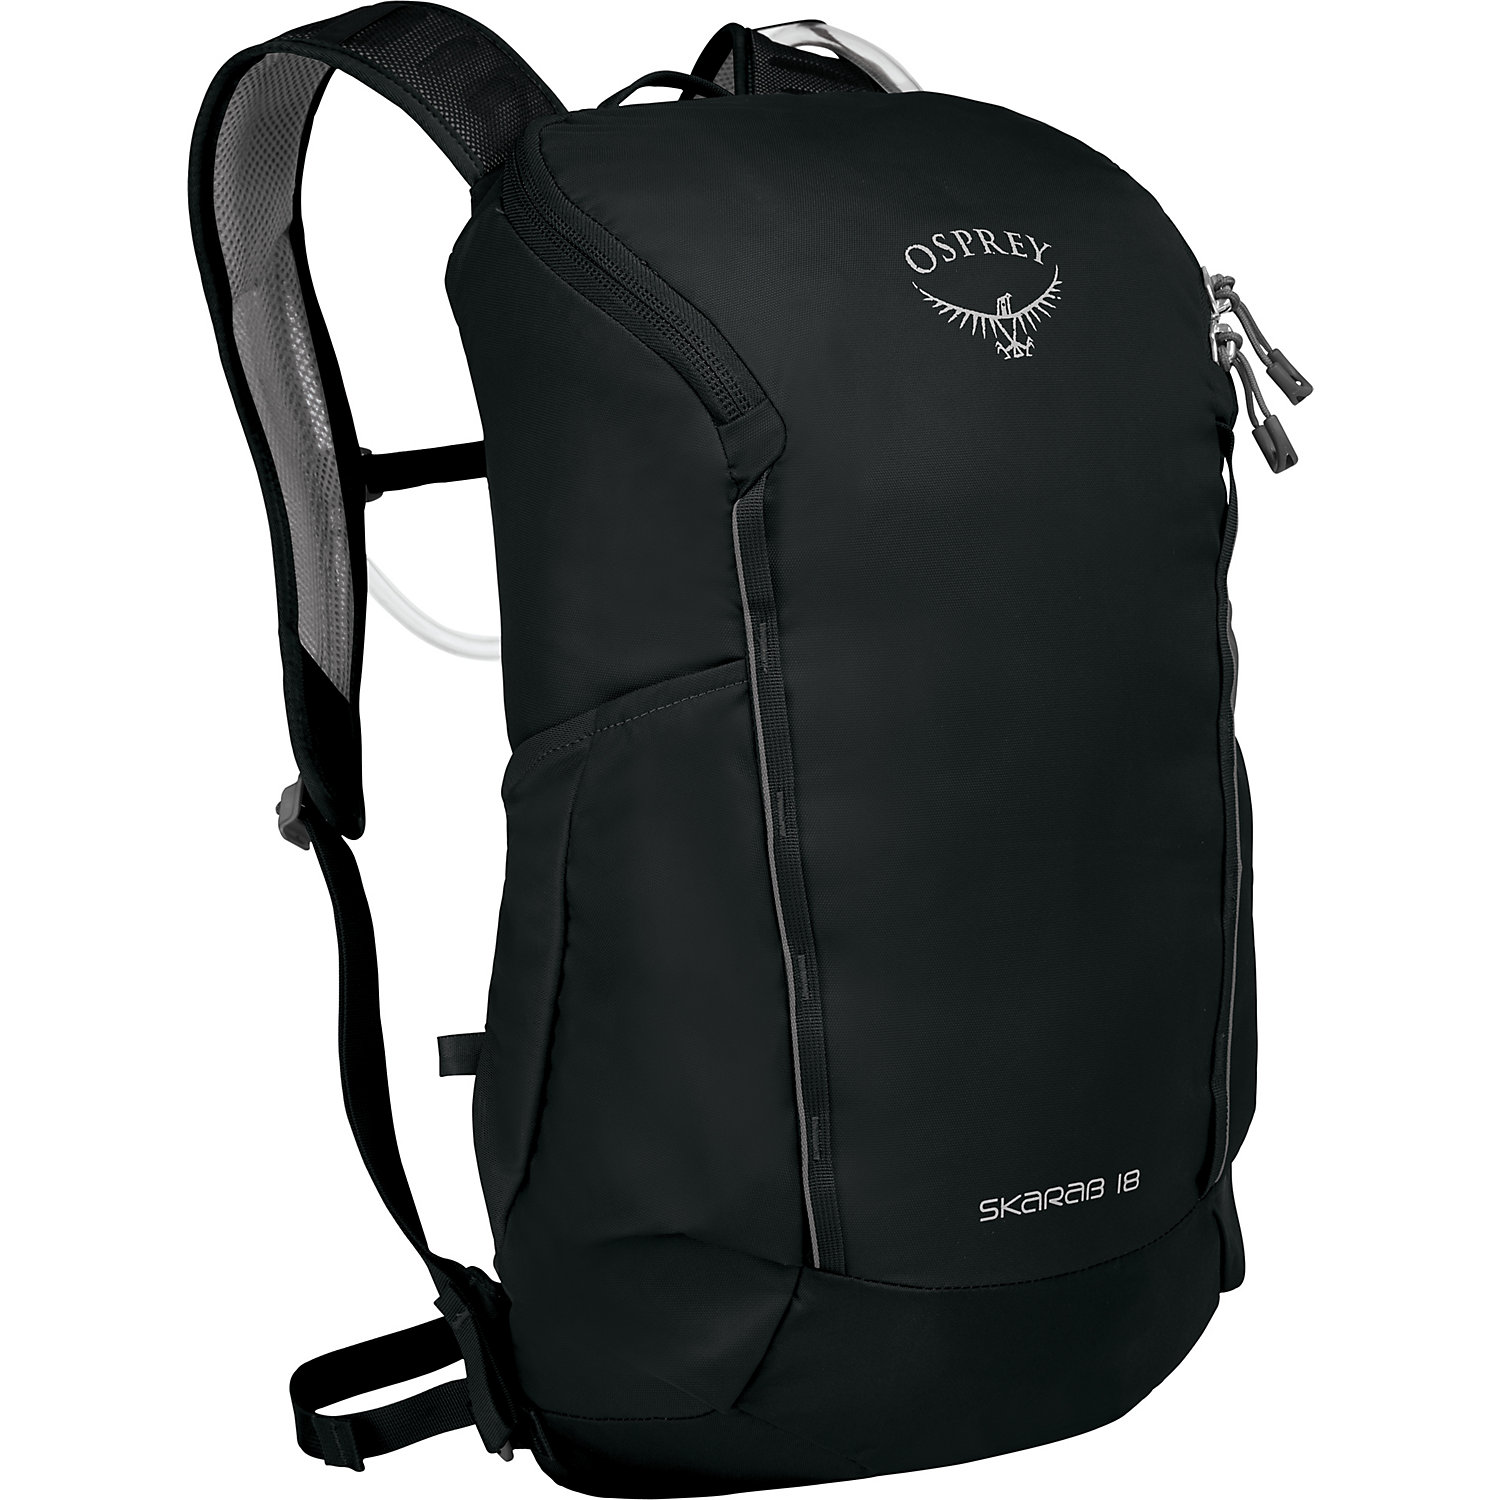 Osprey Skarab 18 Backpack